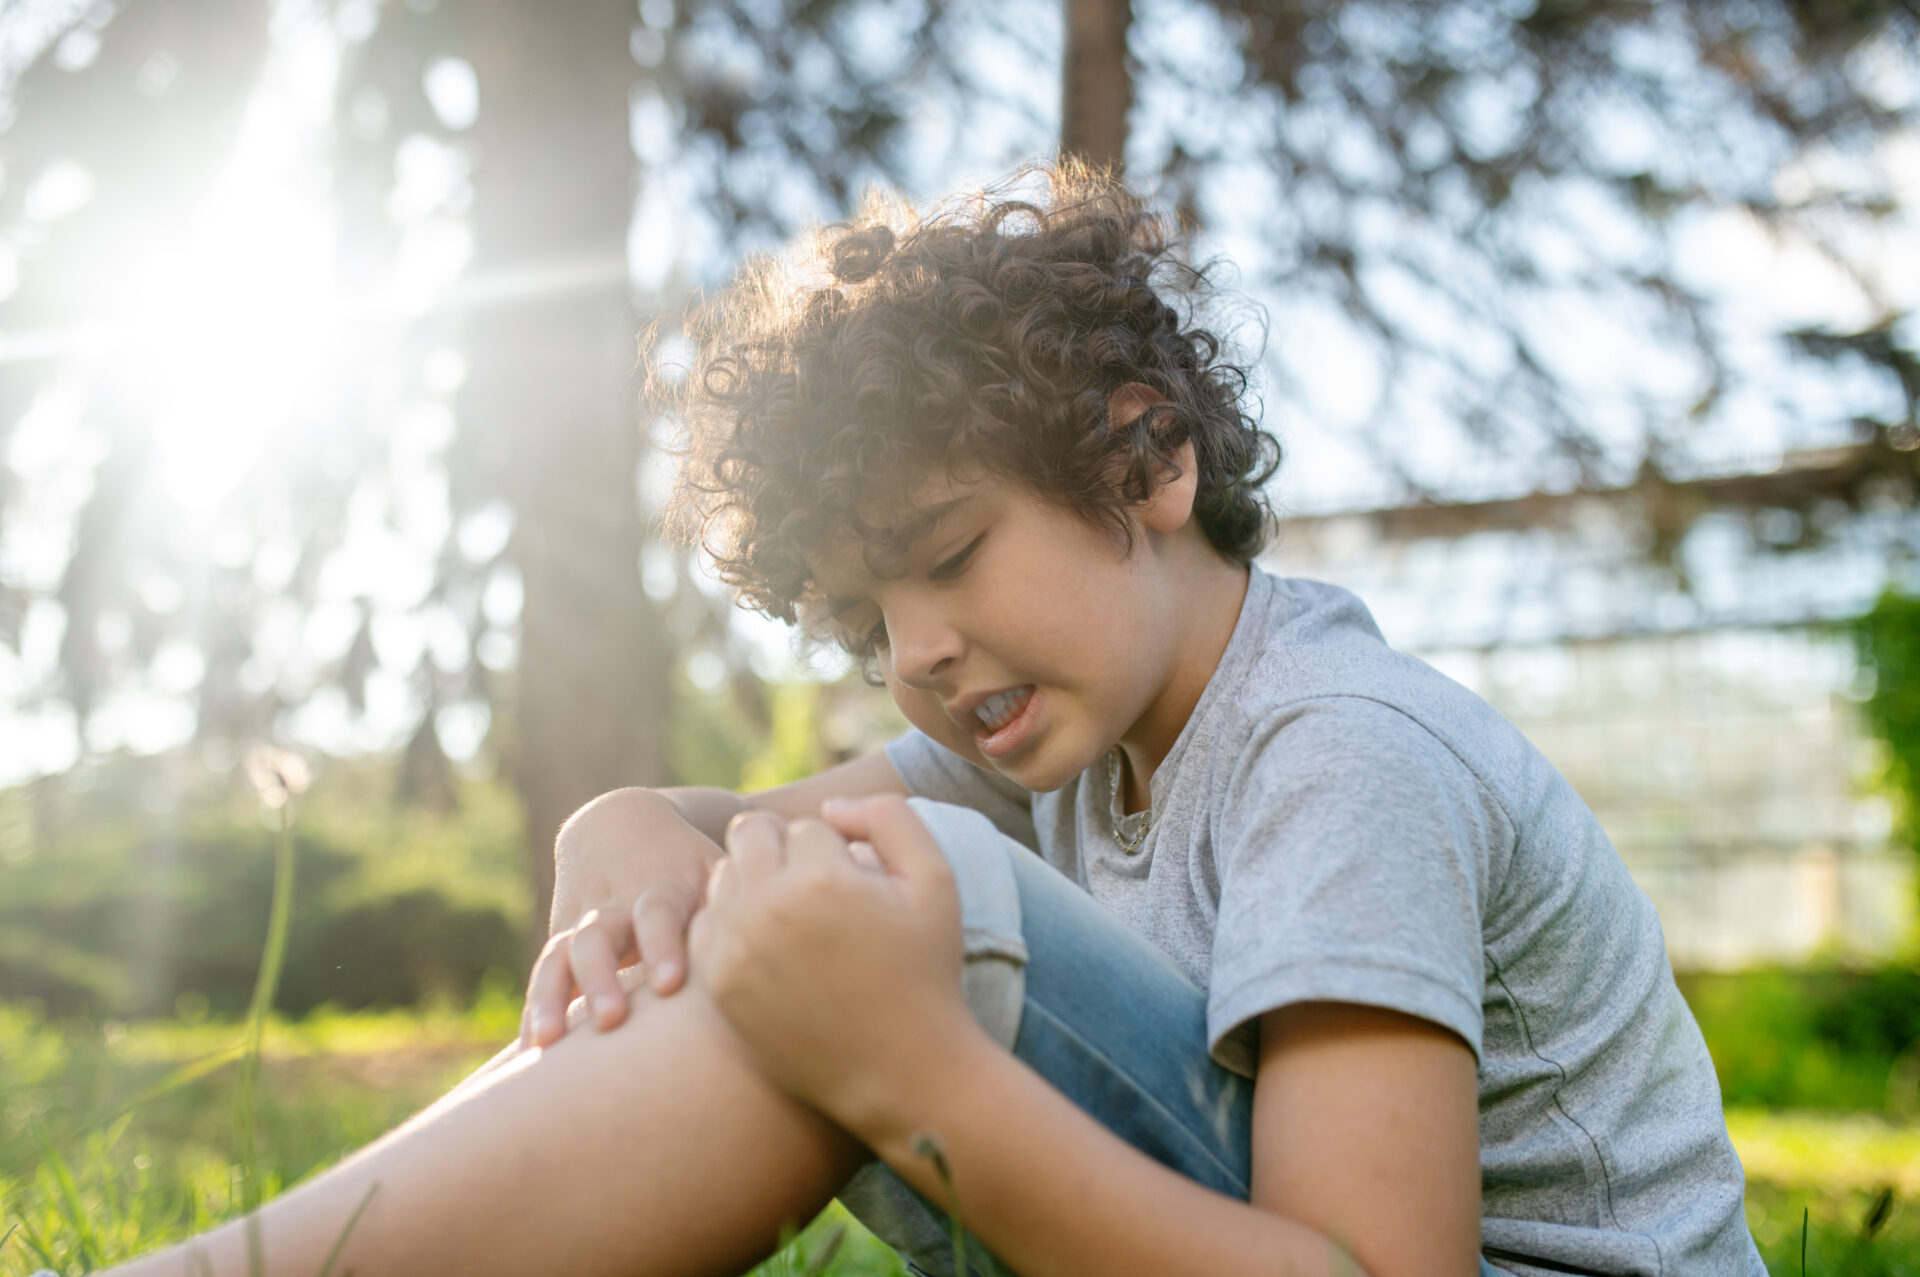 Juvenile Arthritis: Symptoms, Diagnosis, and Support